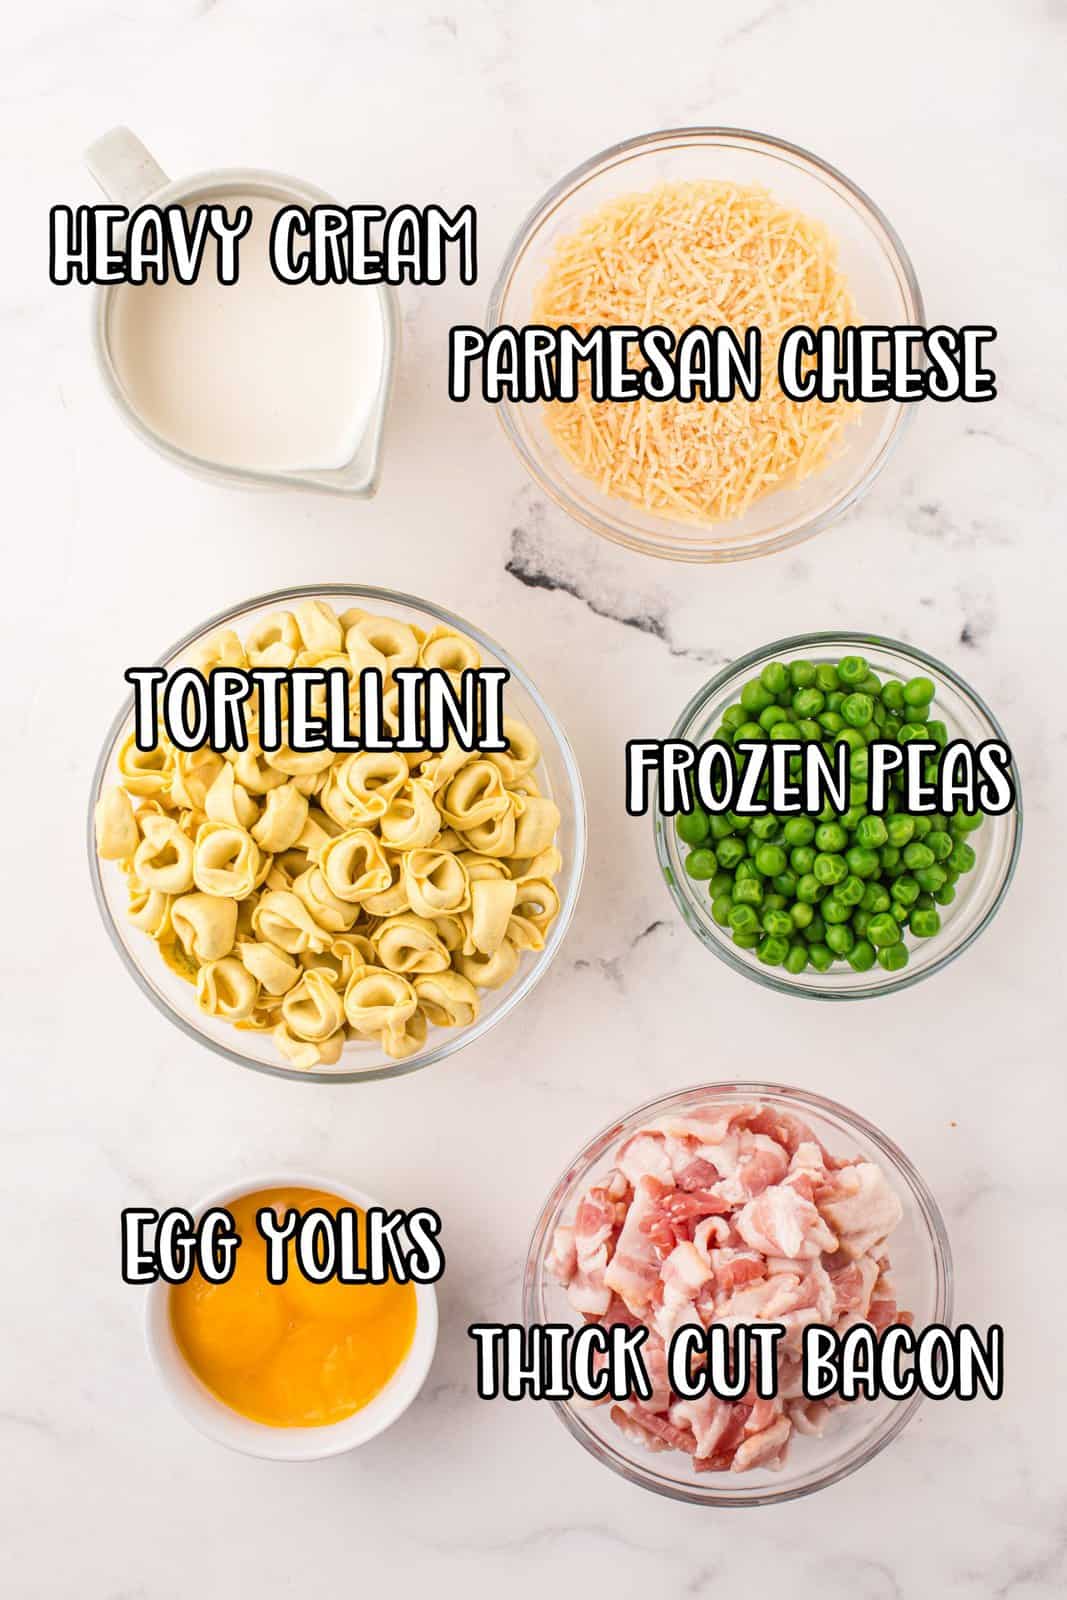 Tortellini, frozen peas, egg yolks, bacon, parmesan cheese, and heavy cream.